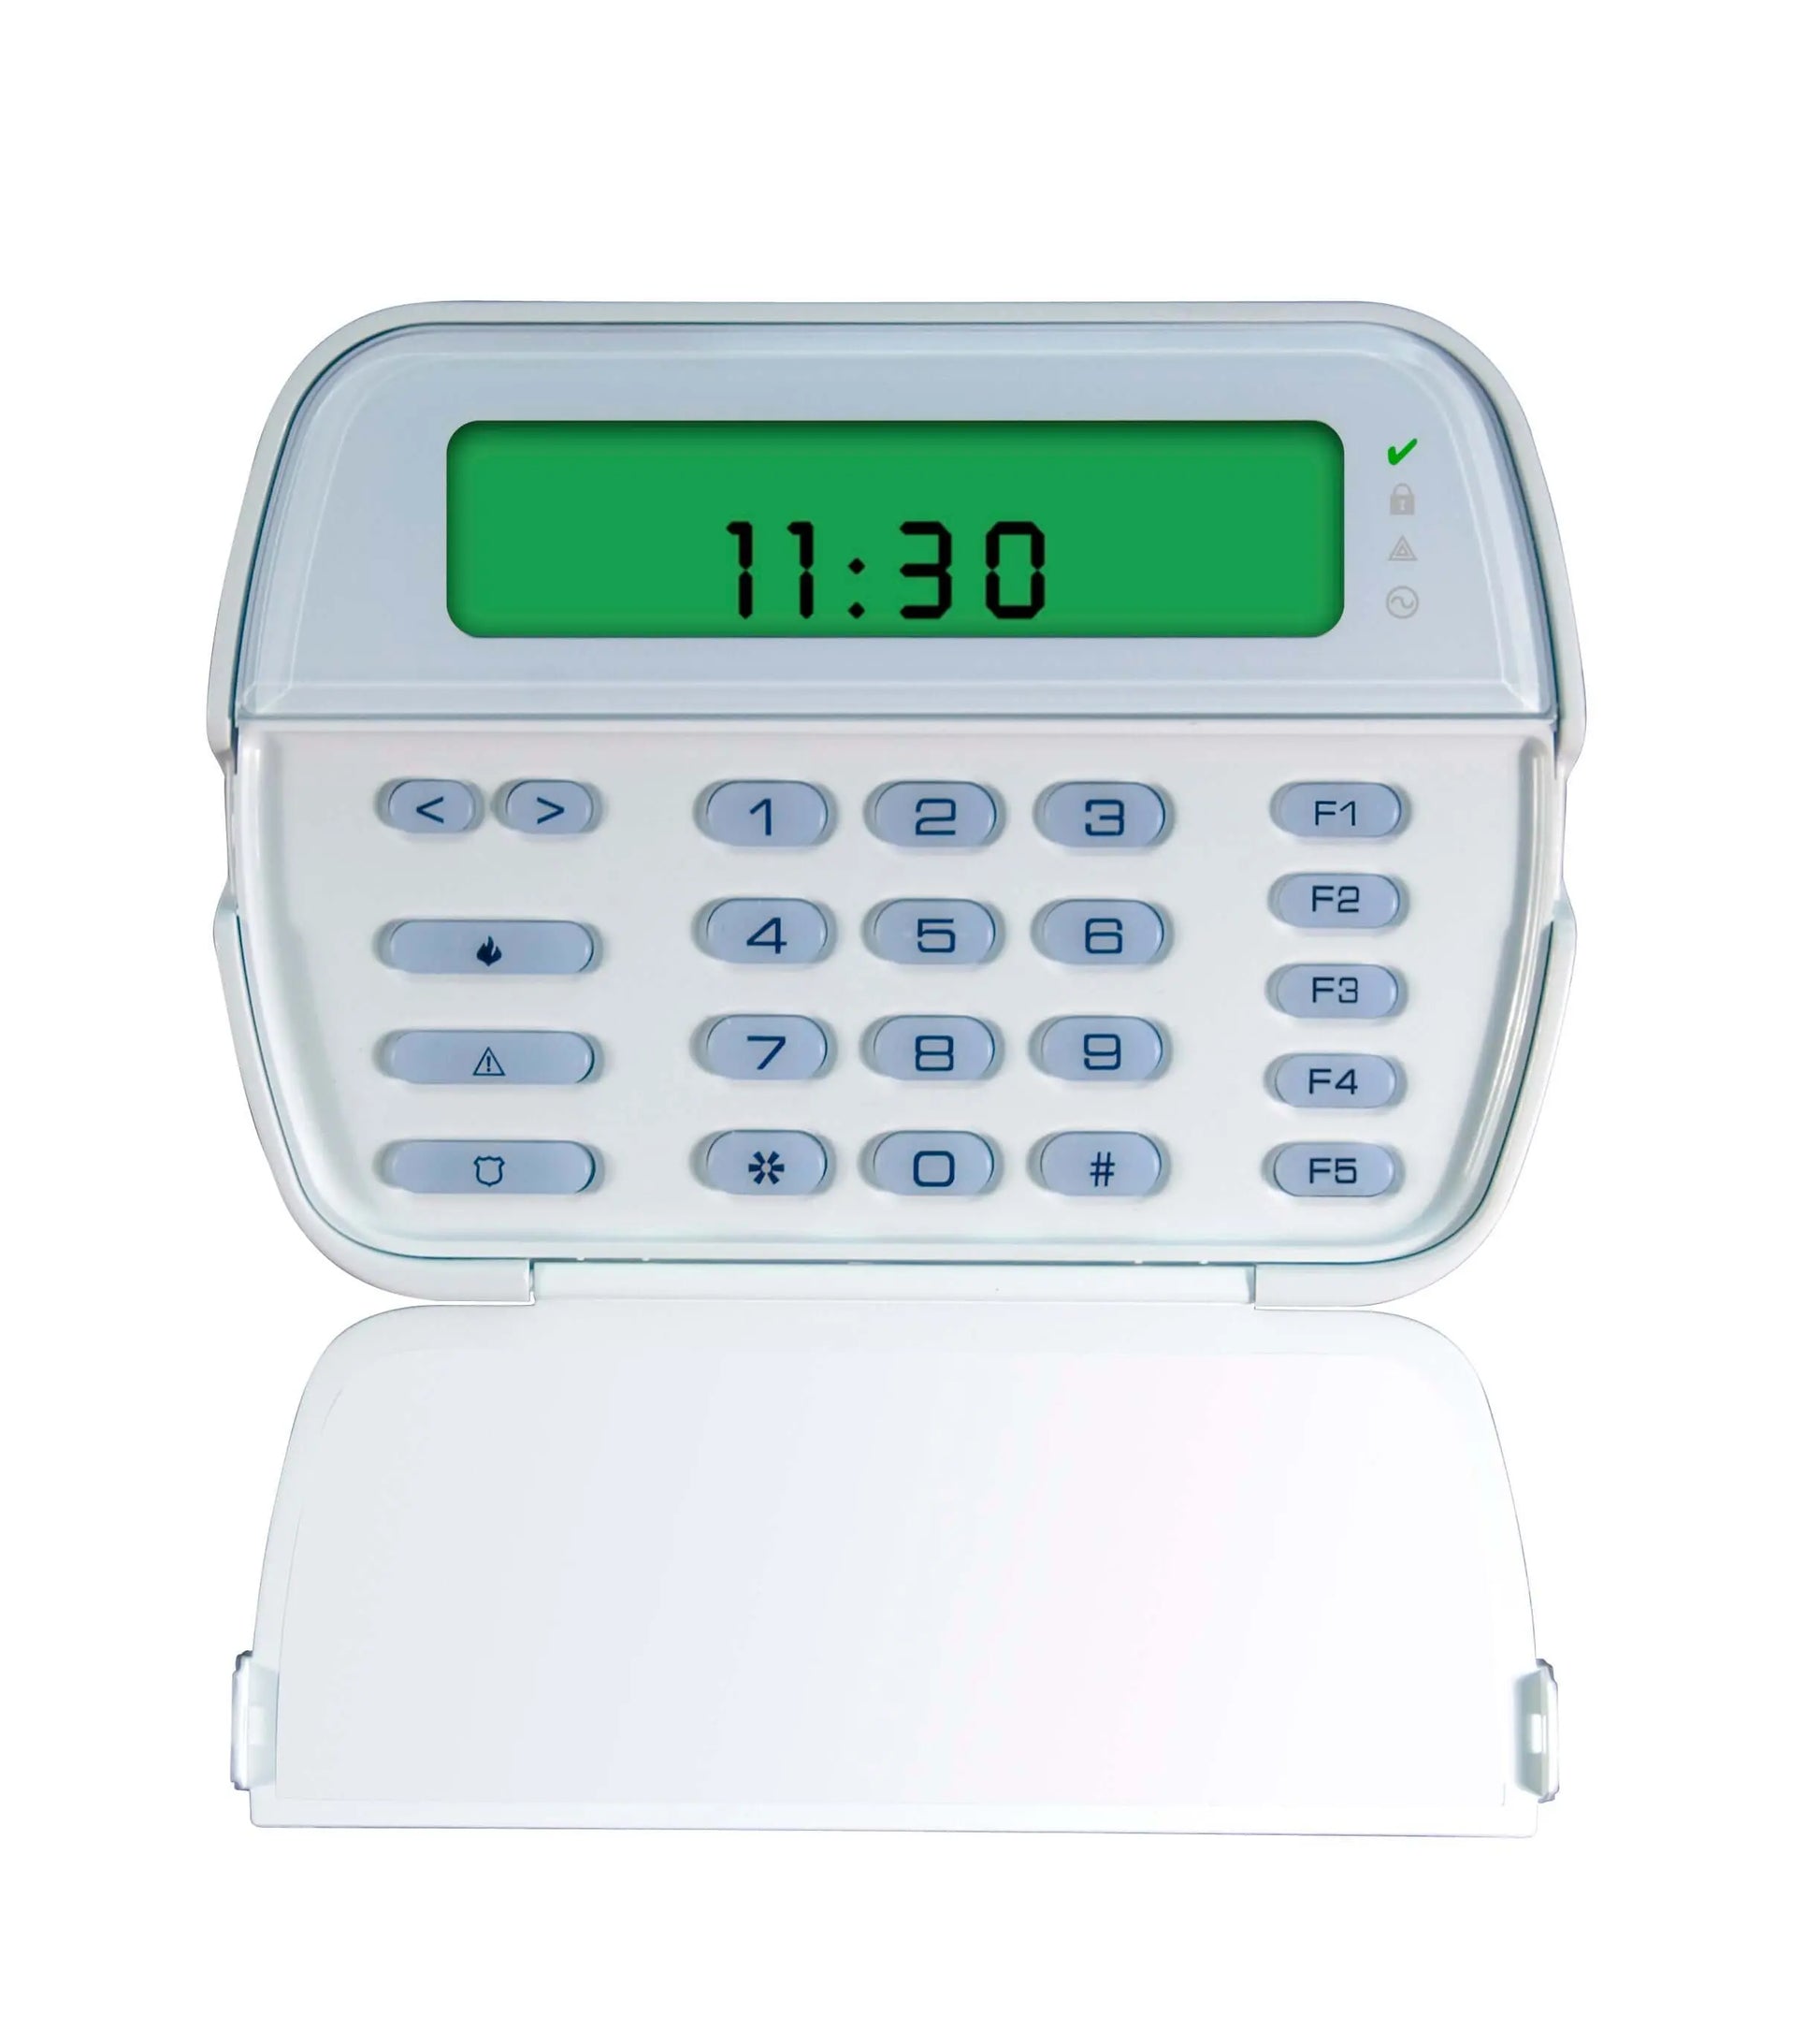 hardwire alarm system keypad